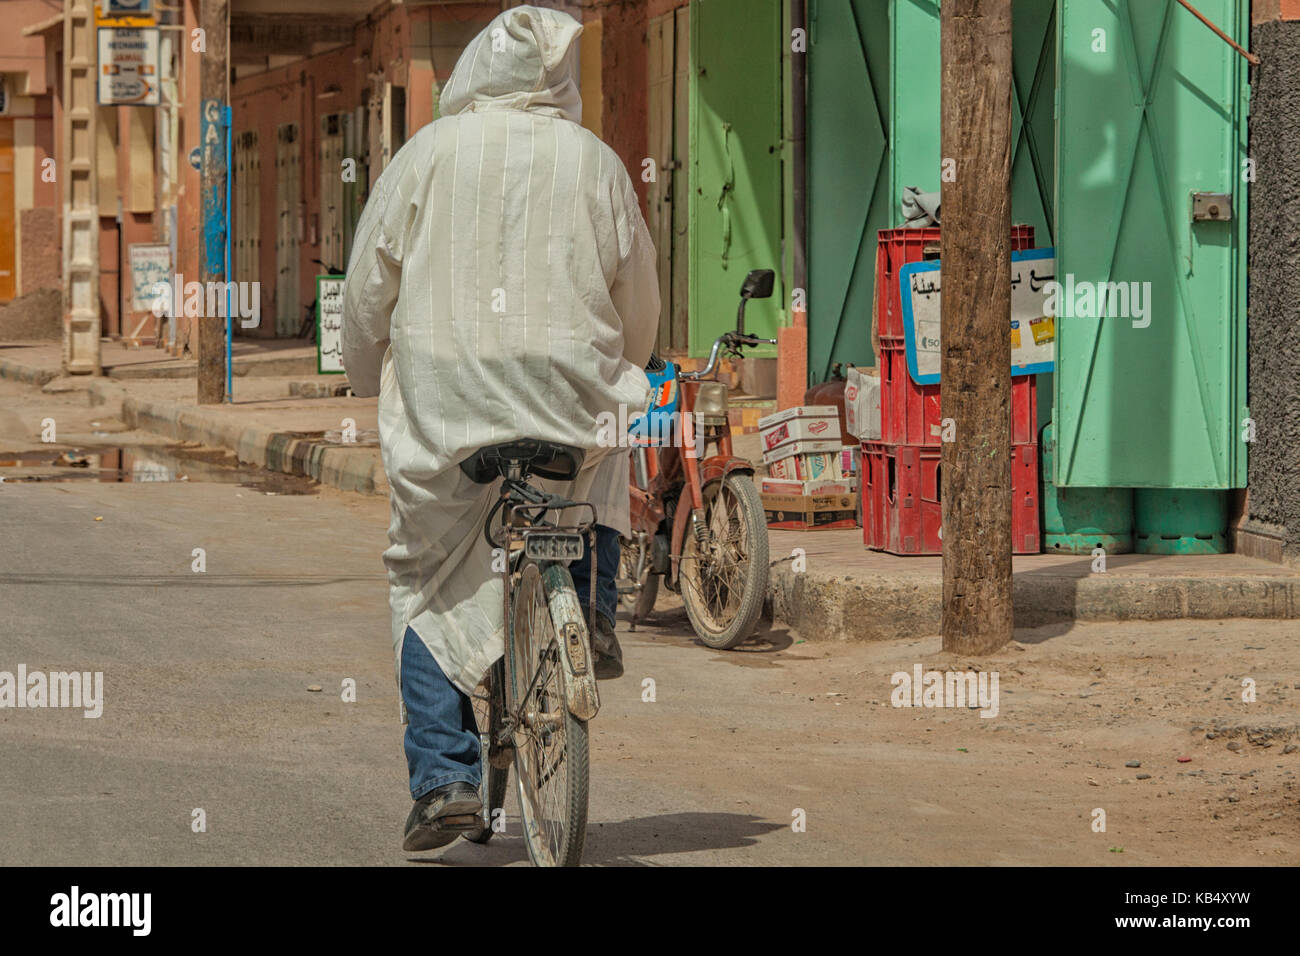 Mann in djellaba auf dem Fahrrad in Marokko Stockfoto